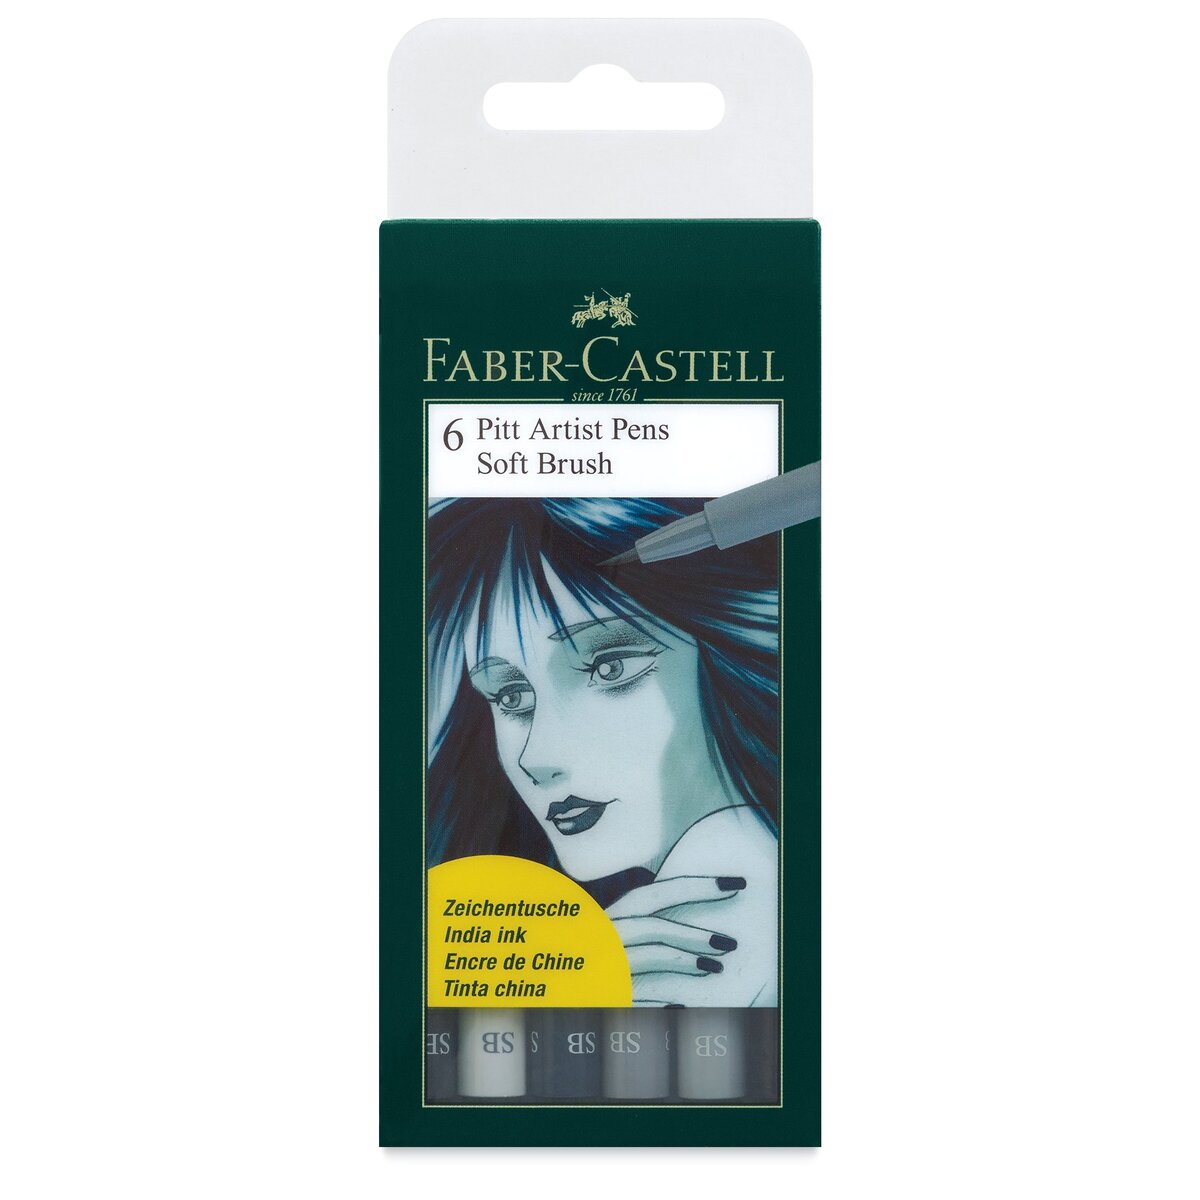 Faber-Castell Pitt Artist Pen Set - Shades of Grey, Set of 6, Soft Brush Nib